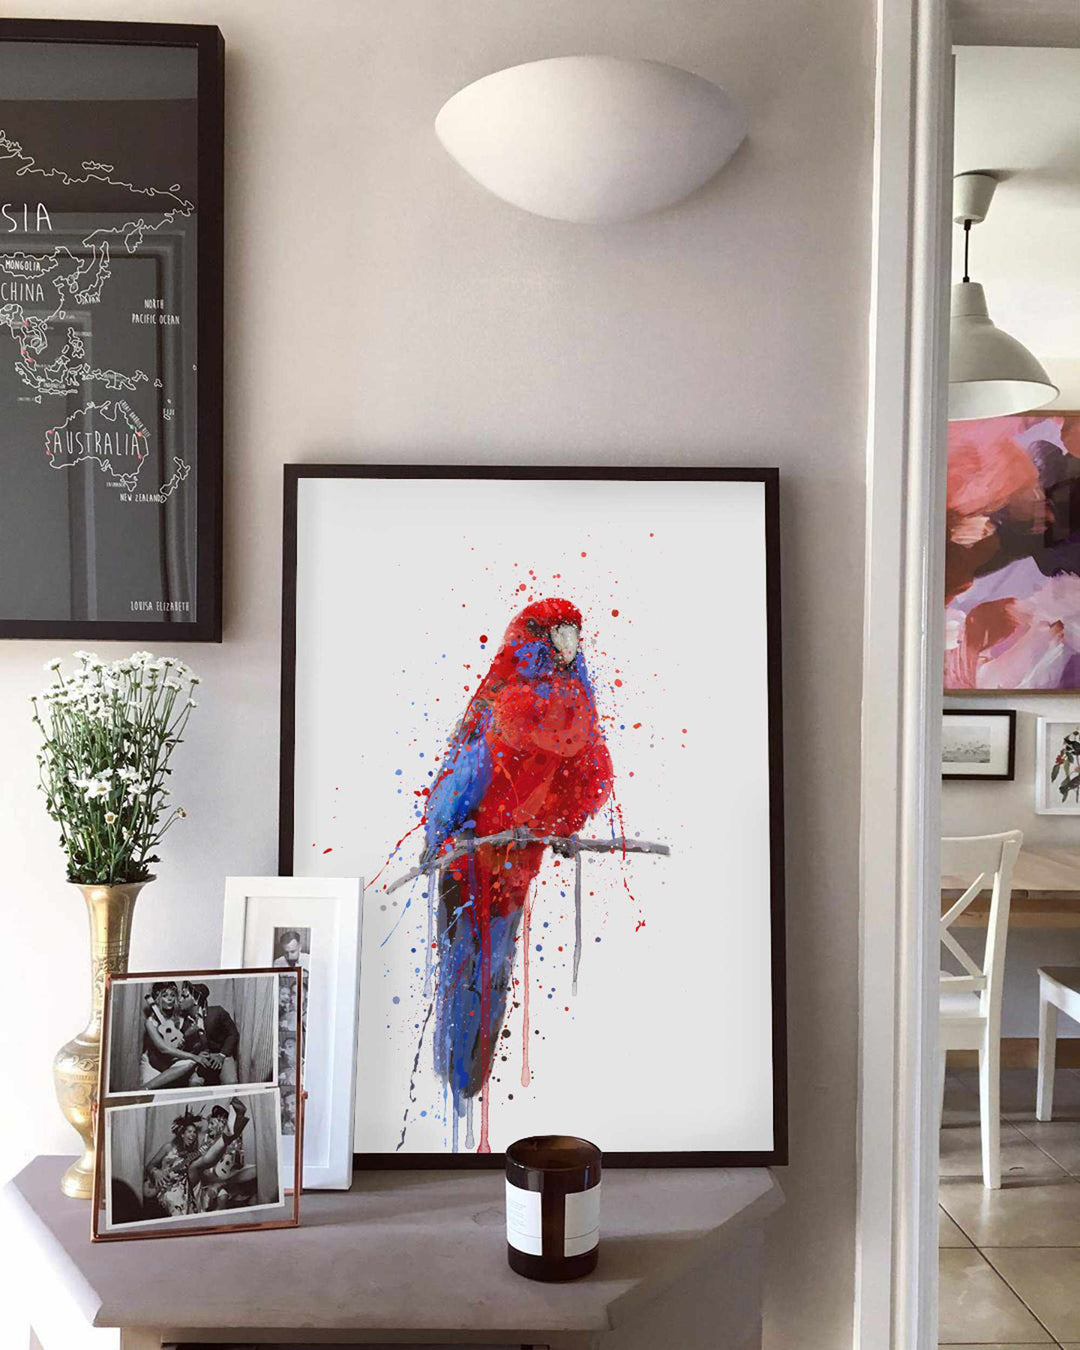 Parrot Wall Art Print ‘Rosella’